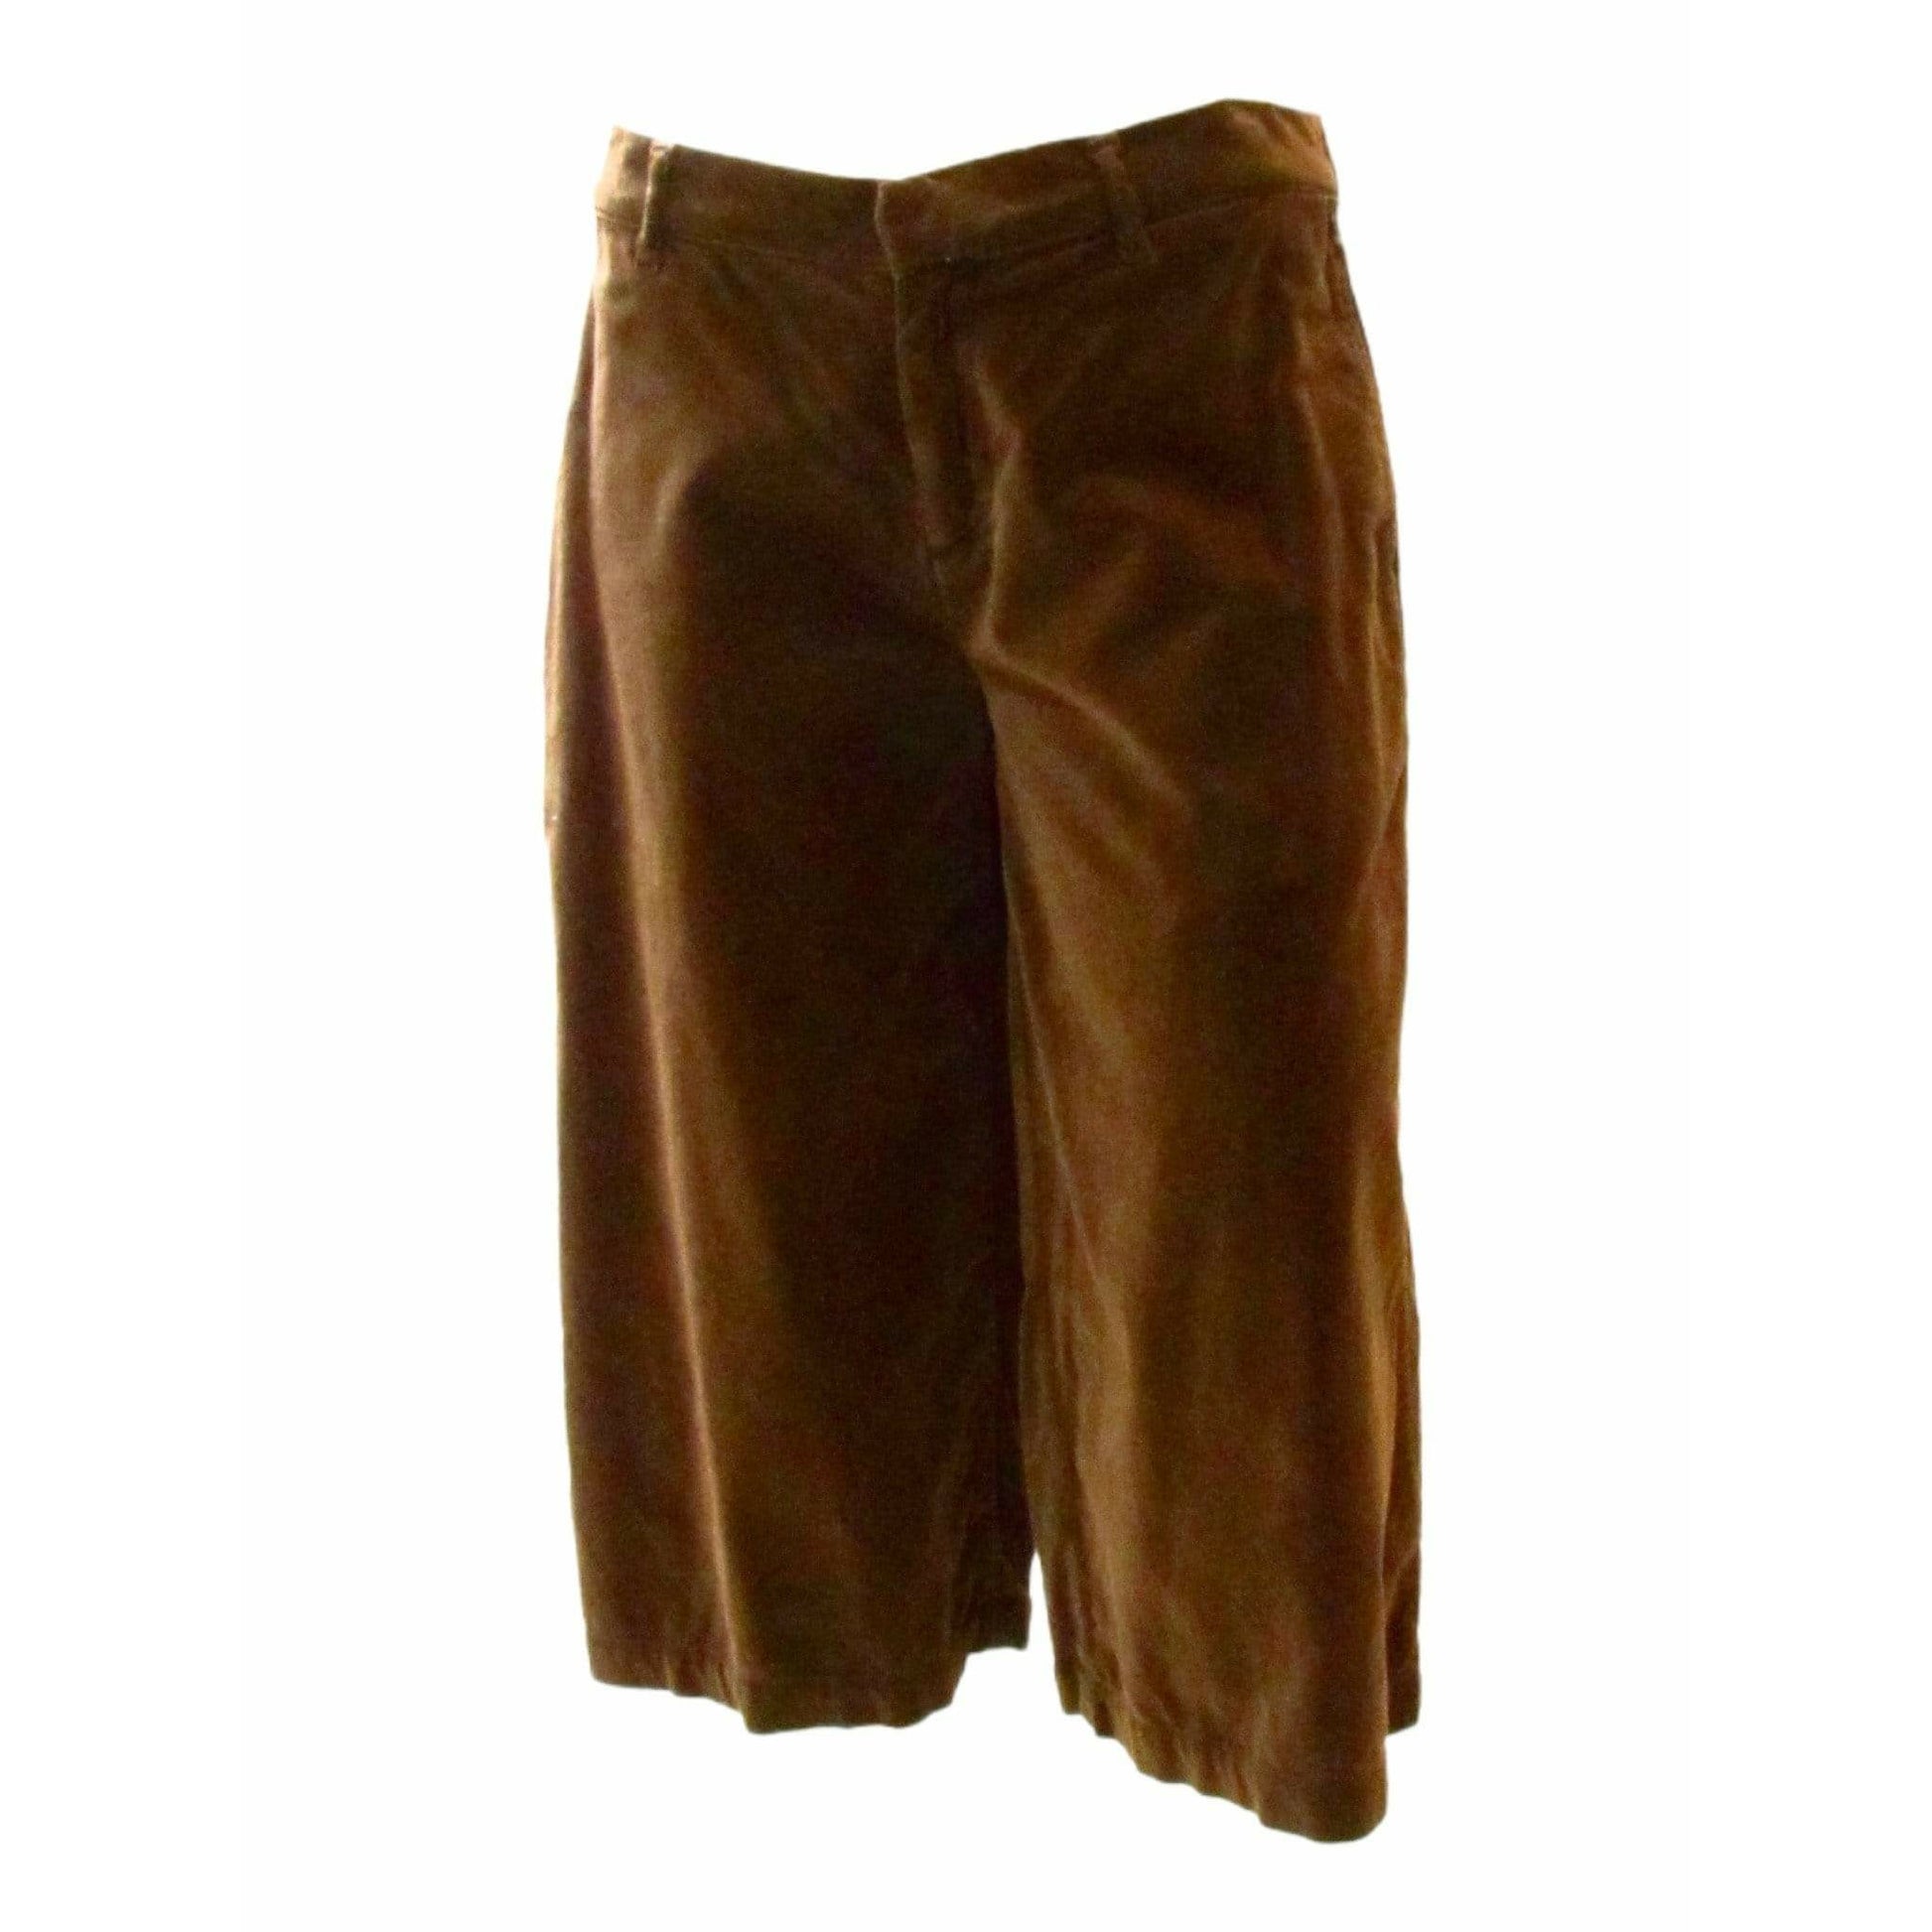 jean-paul-gaultier-short-brown-velvet-pant Pants Black